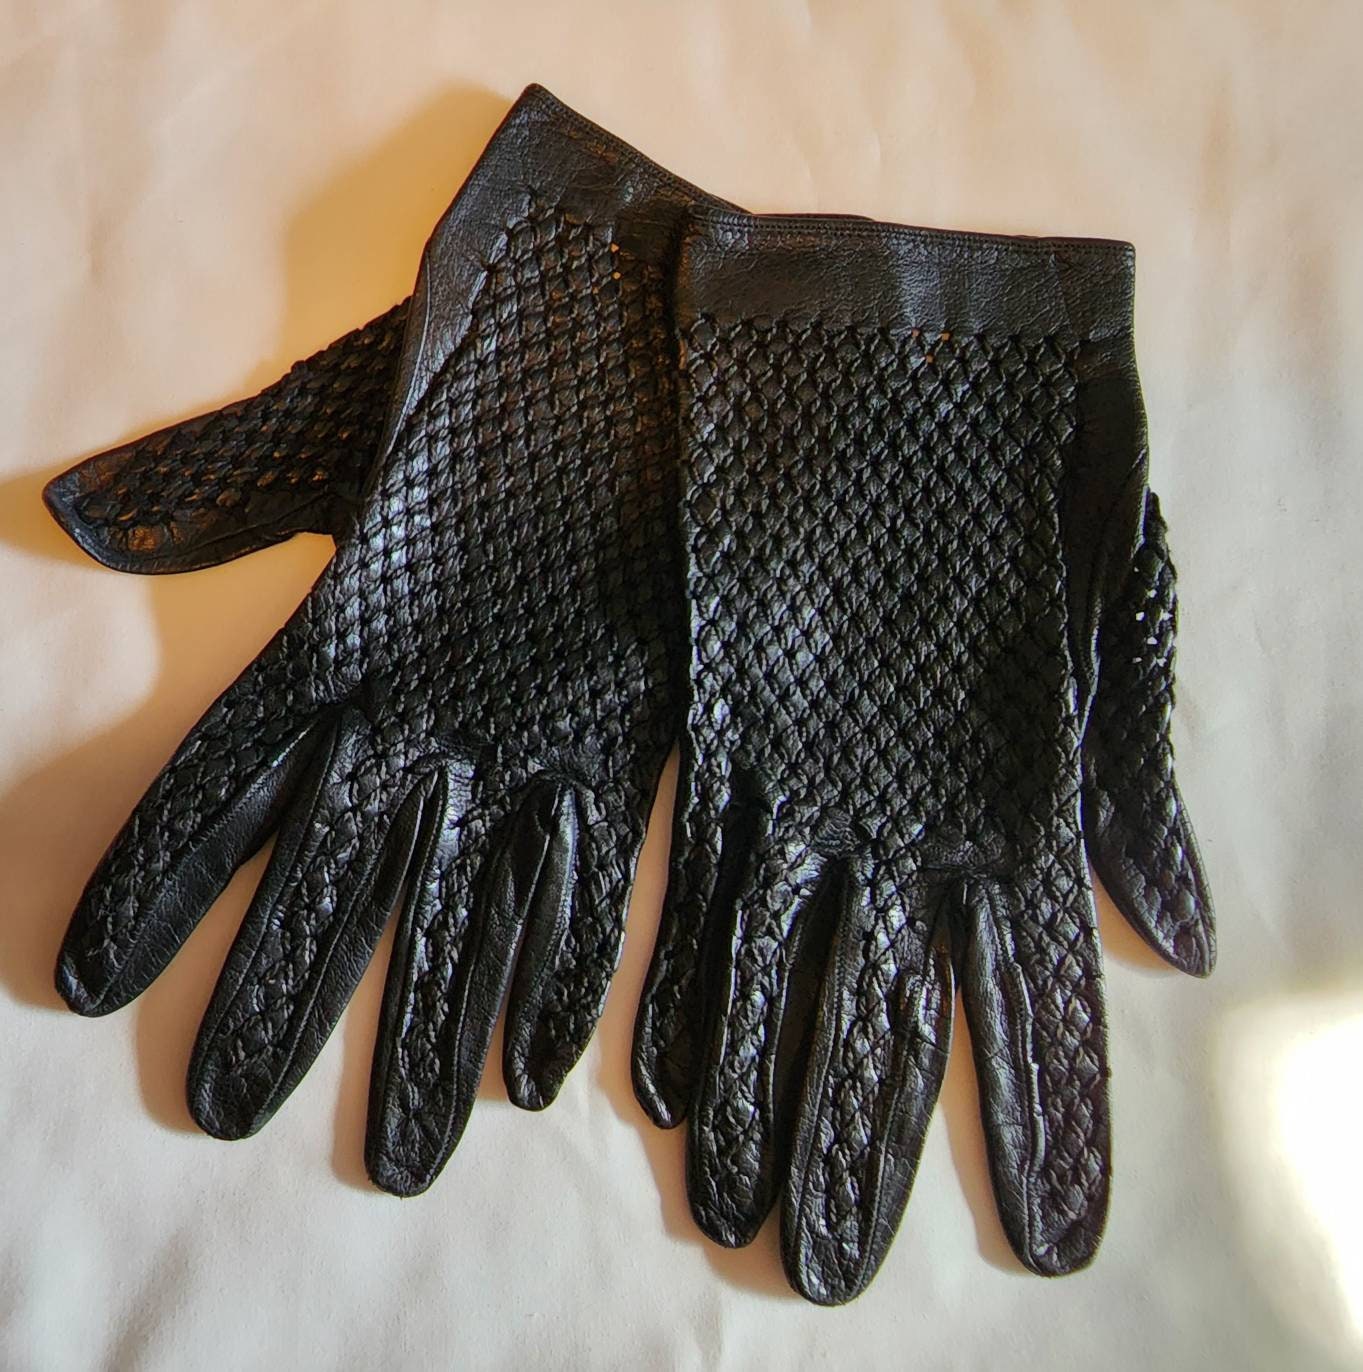 Vintage Leather Gloves 1960s 70s Thin Black Leather Basketweave Wrist Gloves Mid Century Boho S M